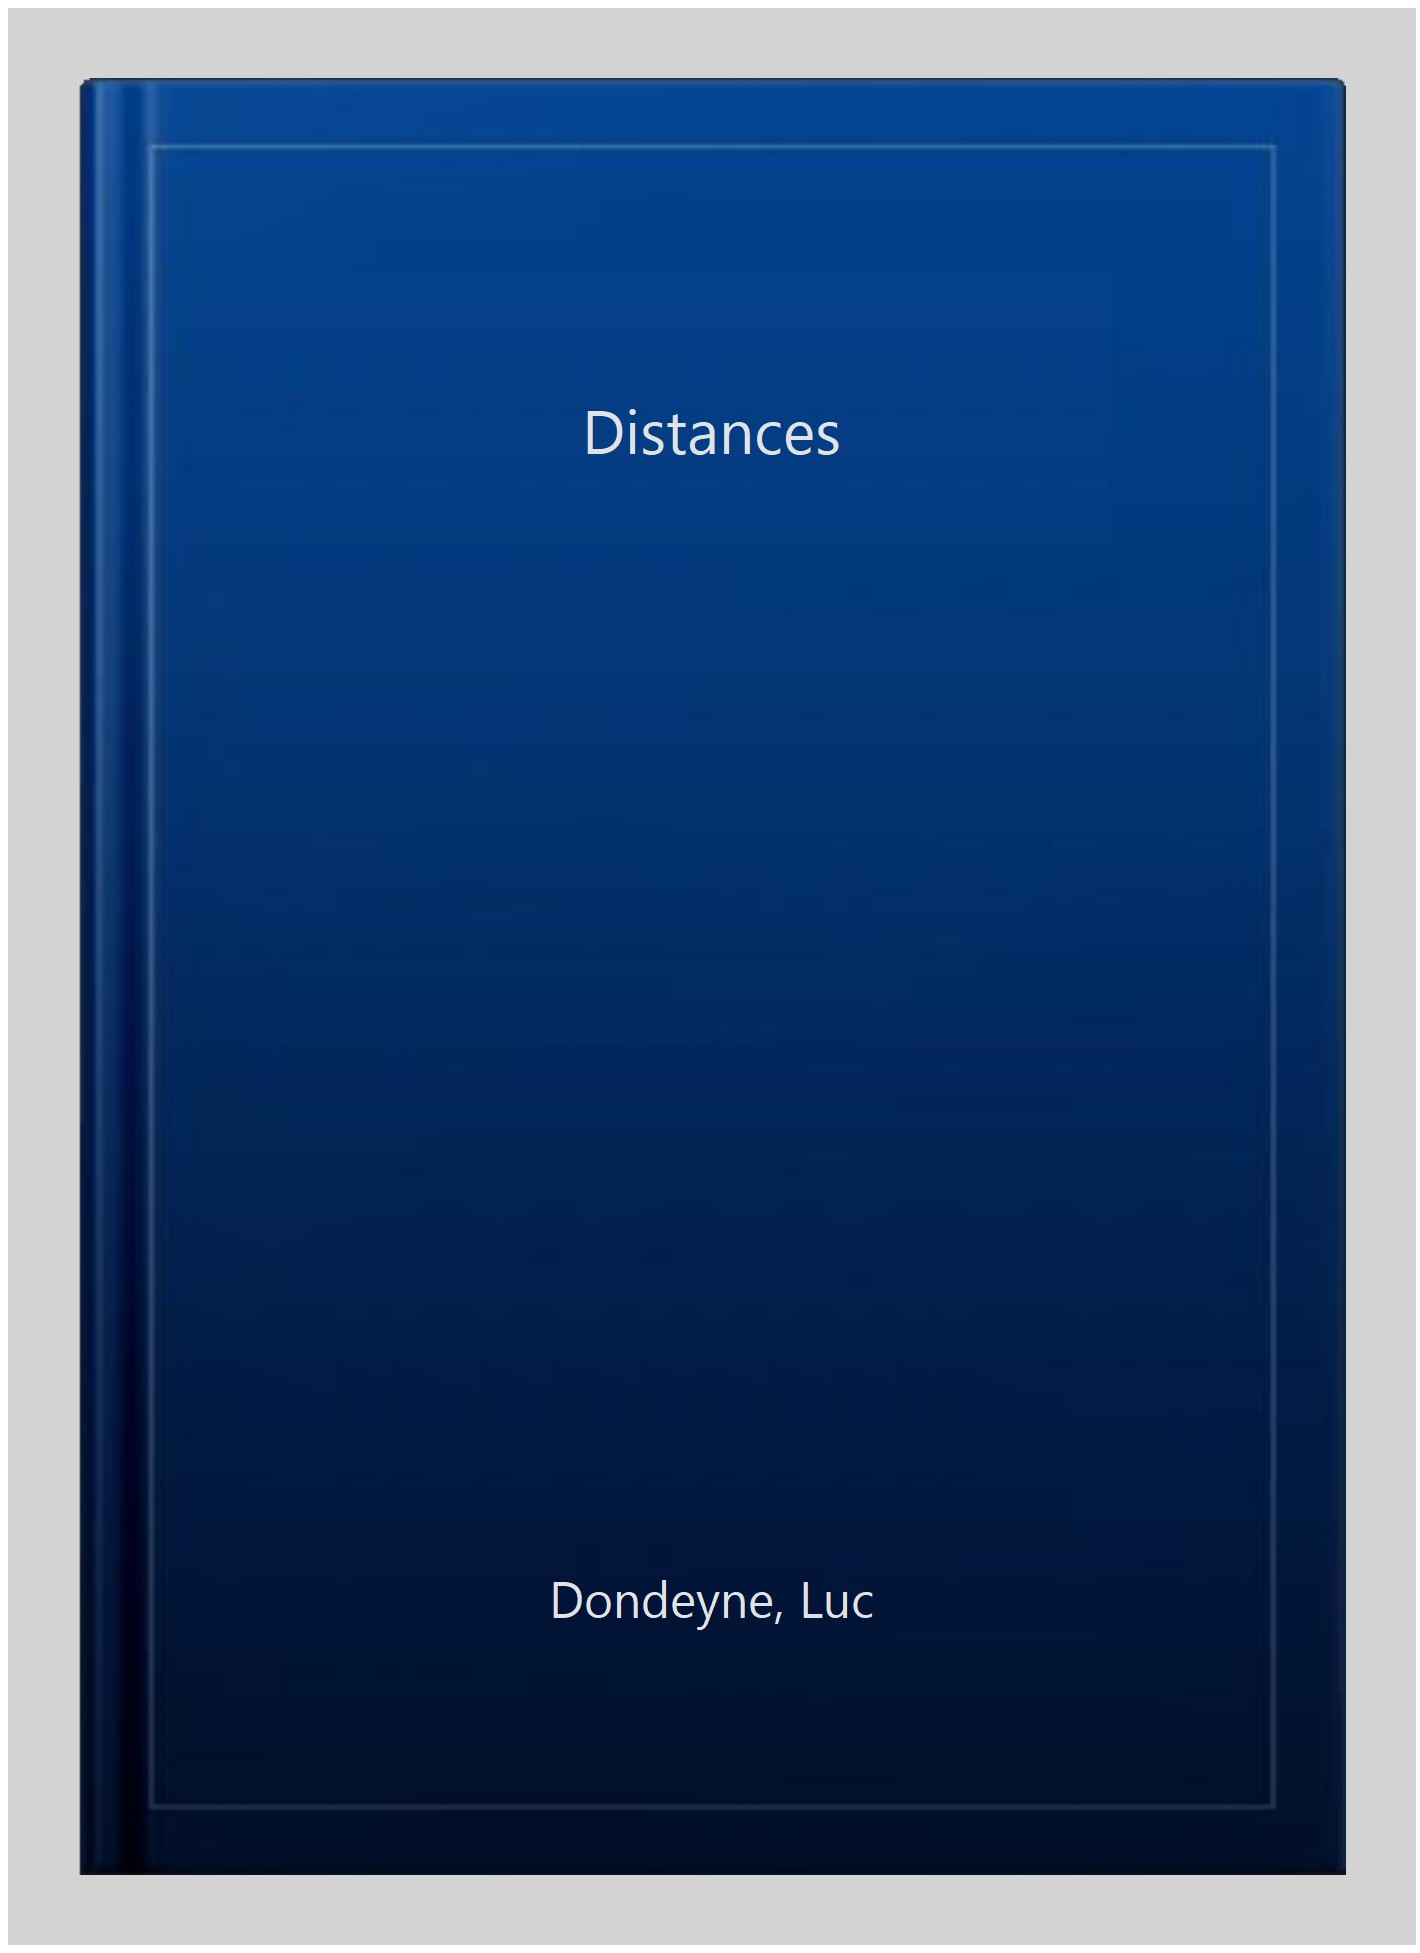 Distances - Dondeyne, Luc